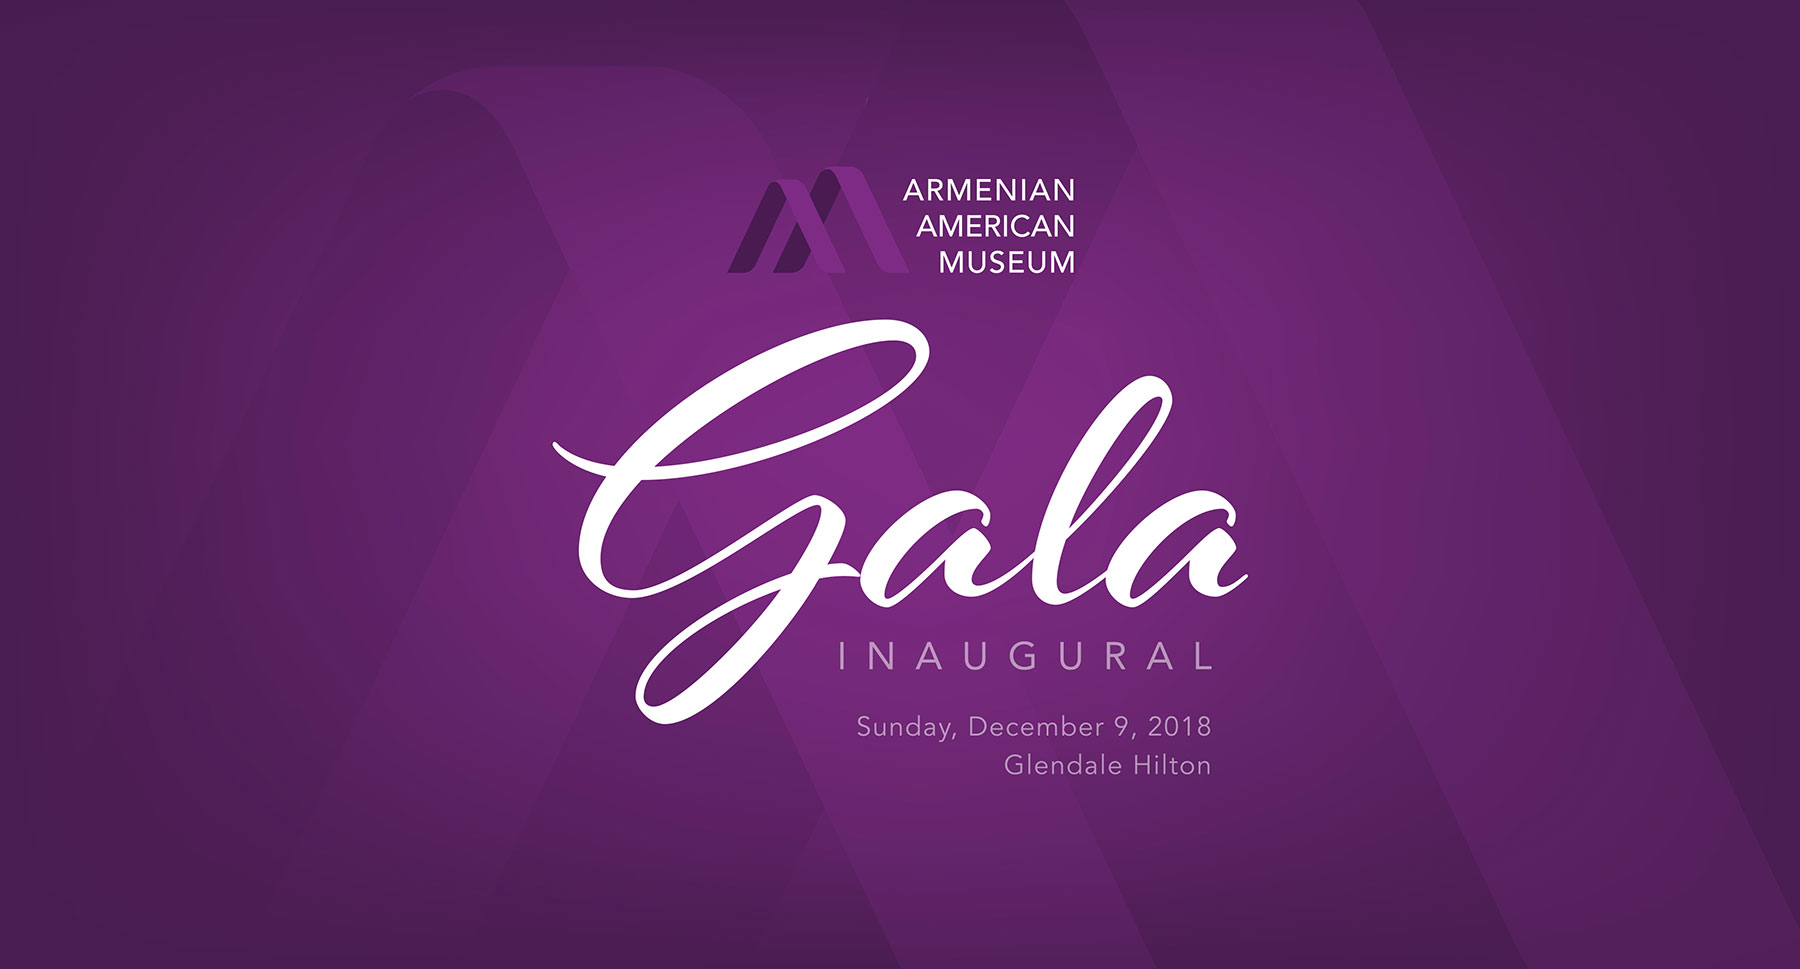 Armenian American Museum Announces Inaugural Gala